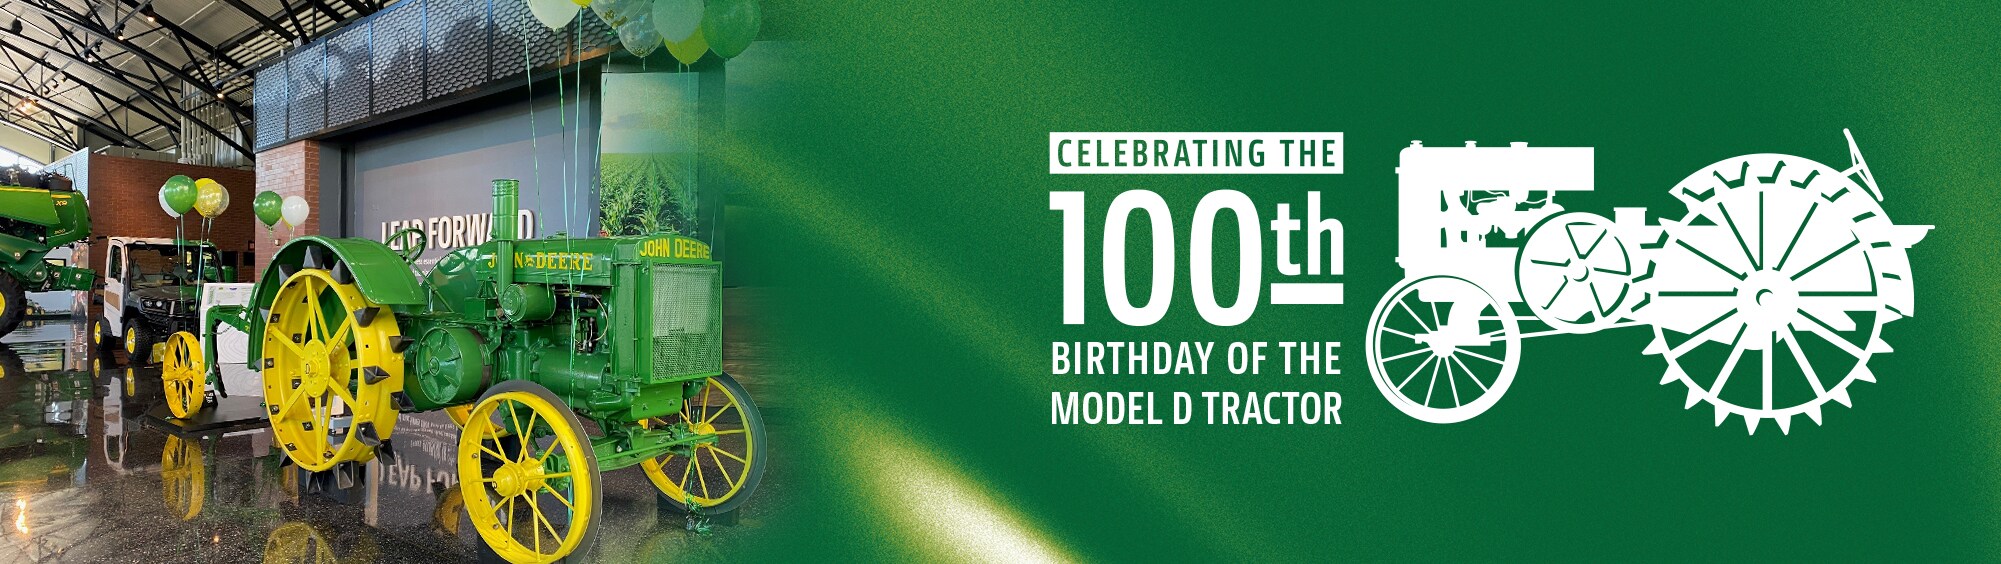 John Deere Model D Tractor 100th Birthday Banner